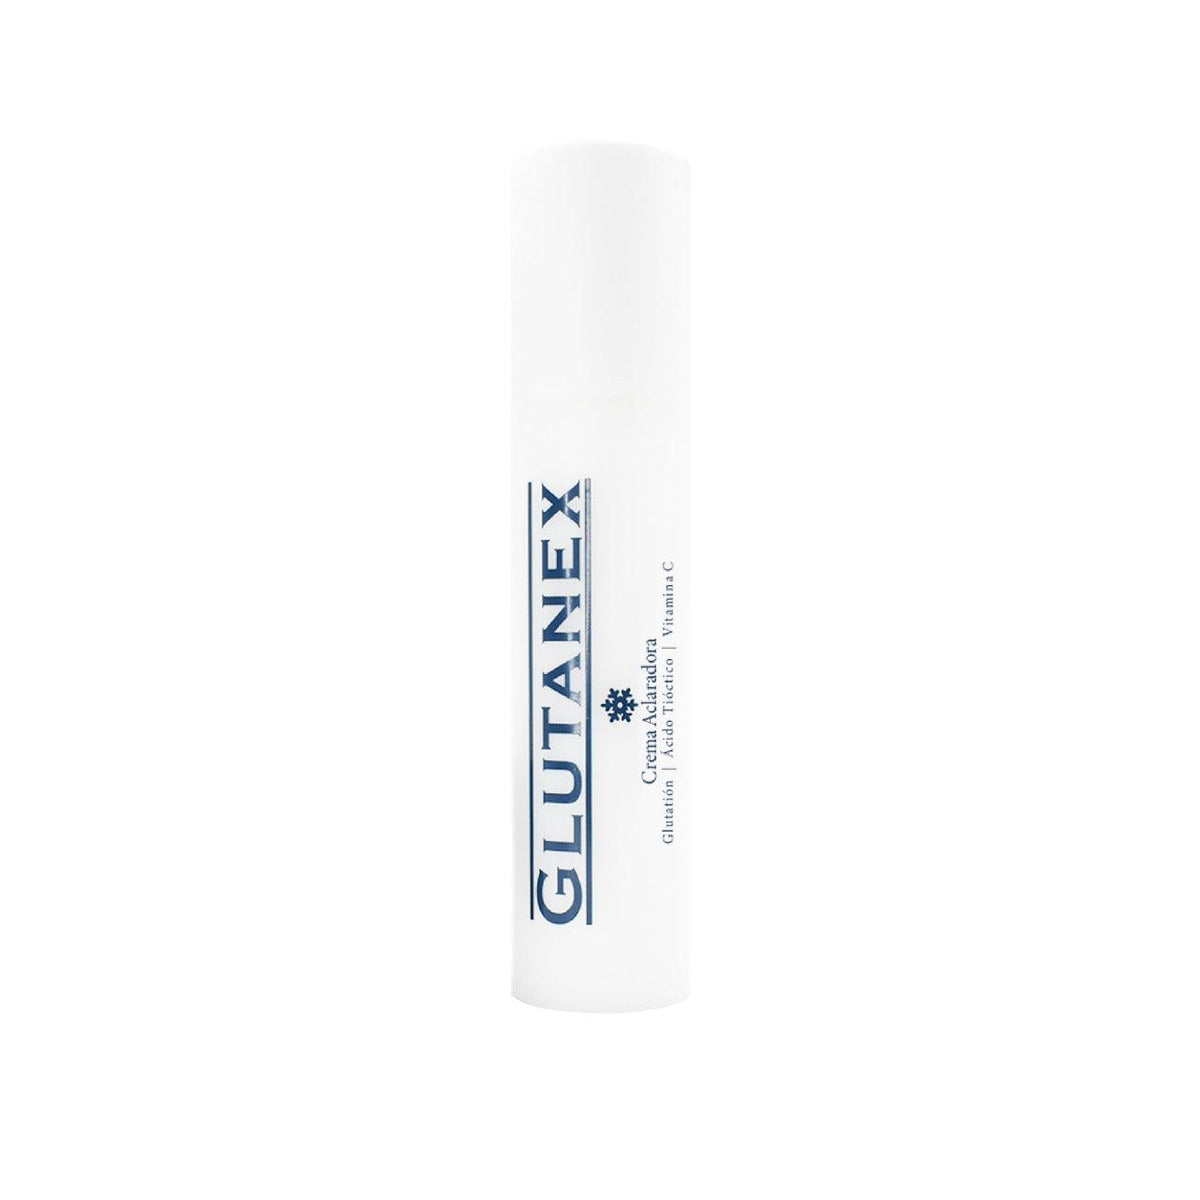 Glutanex Crema / Snow White Cream